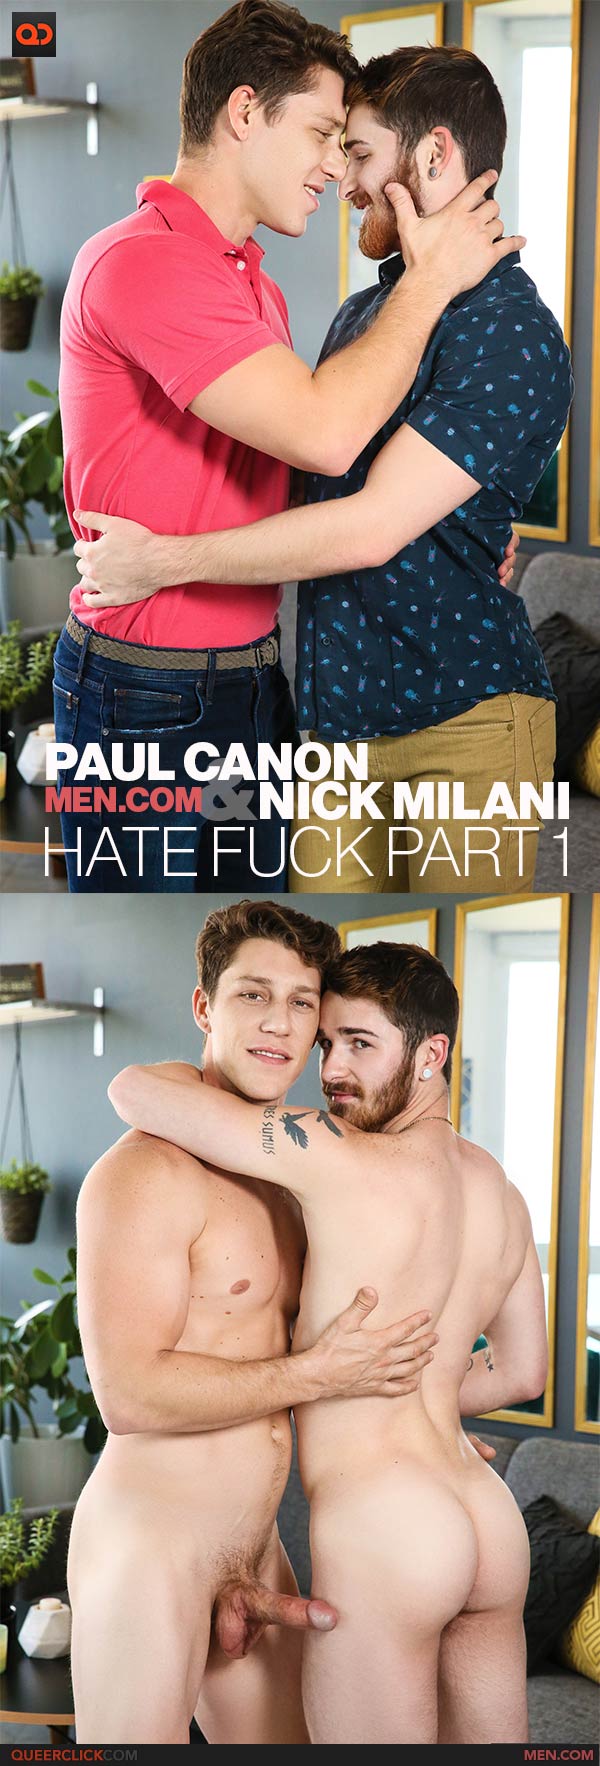 Men.com: Paul Canon and Nick Milani